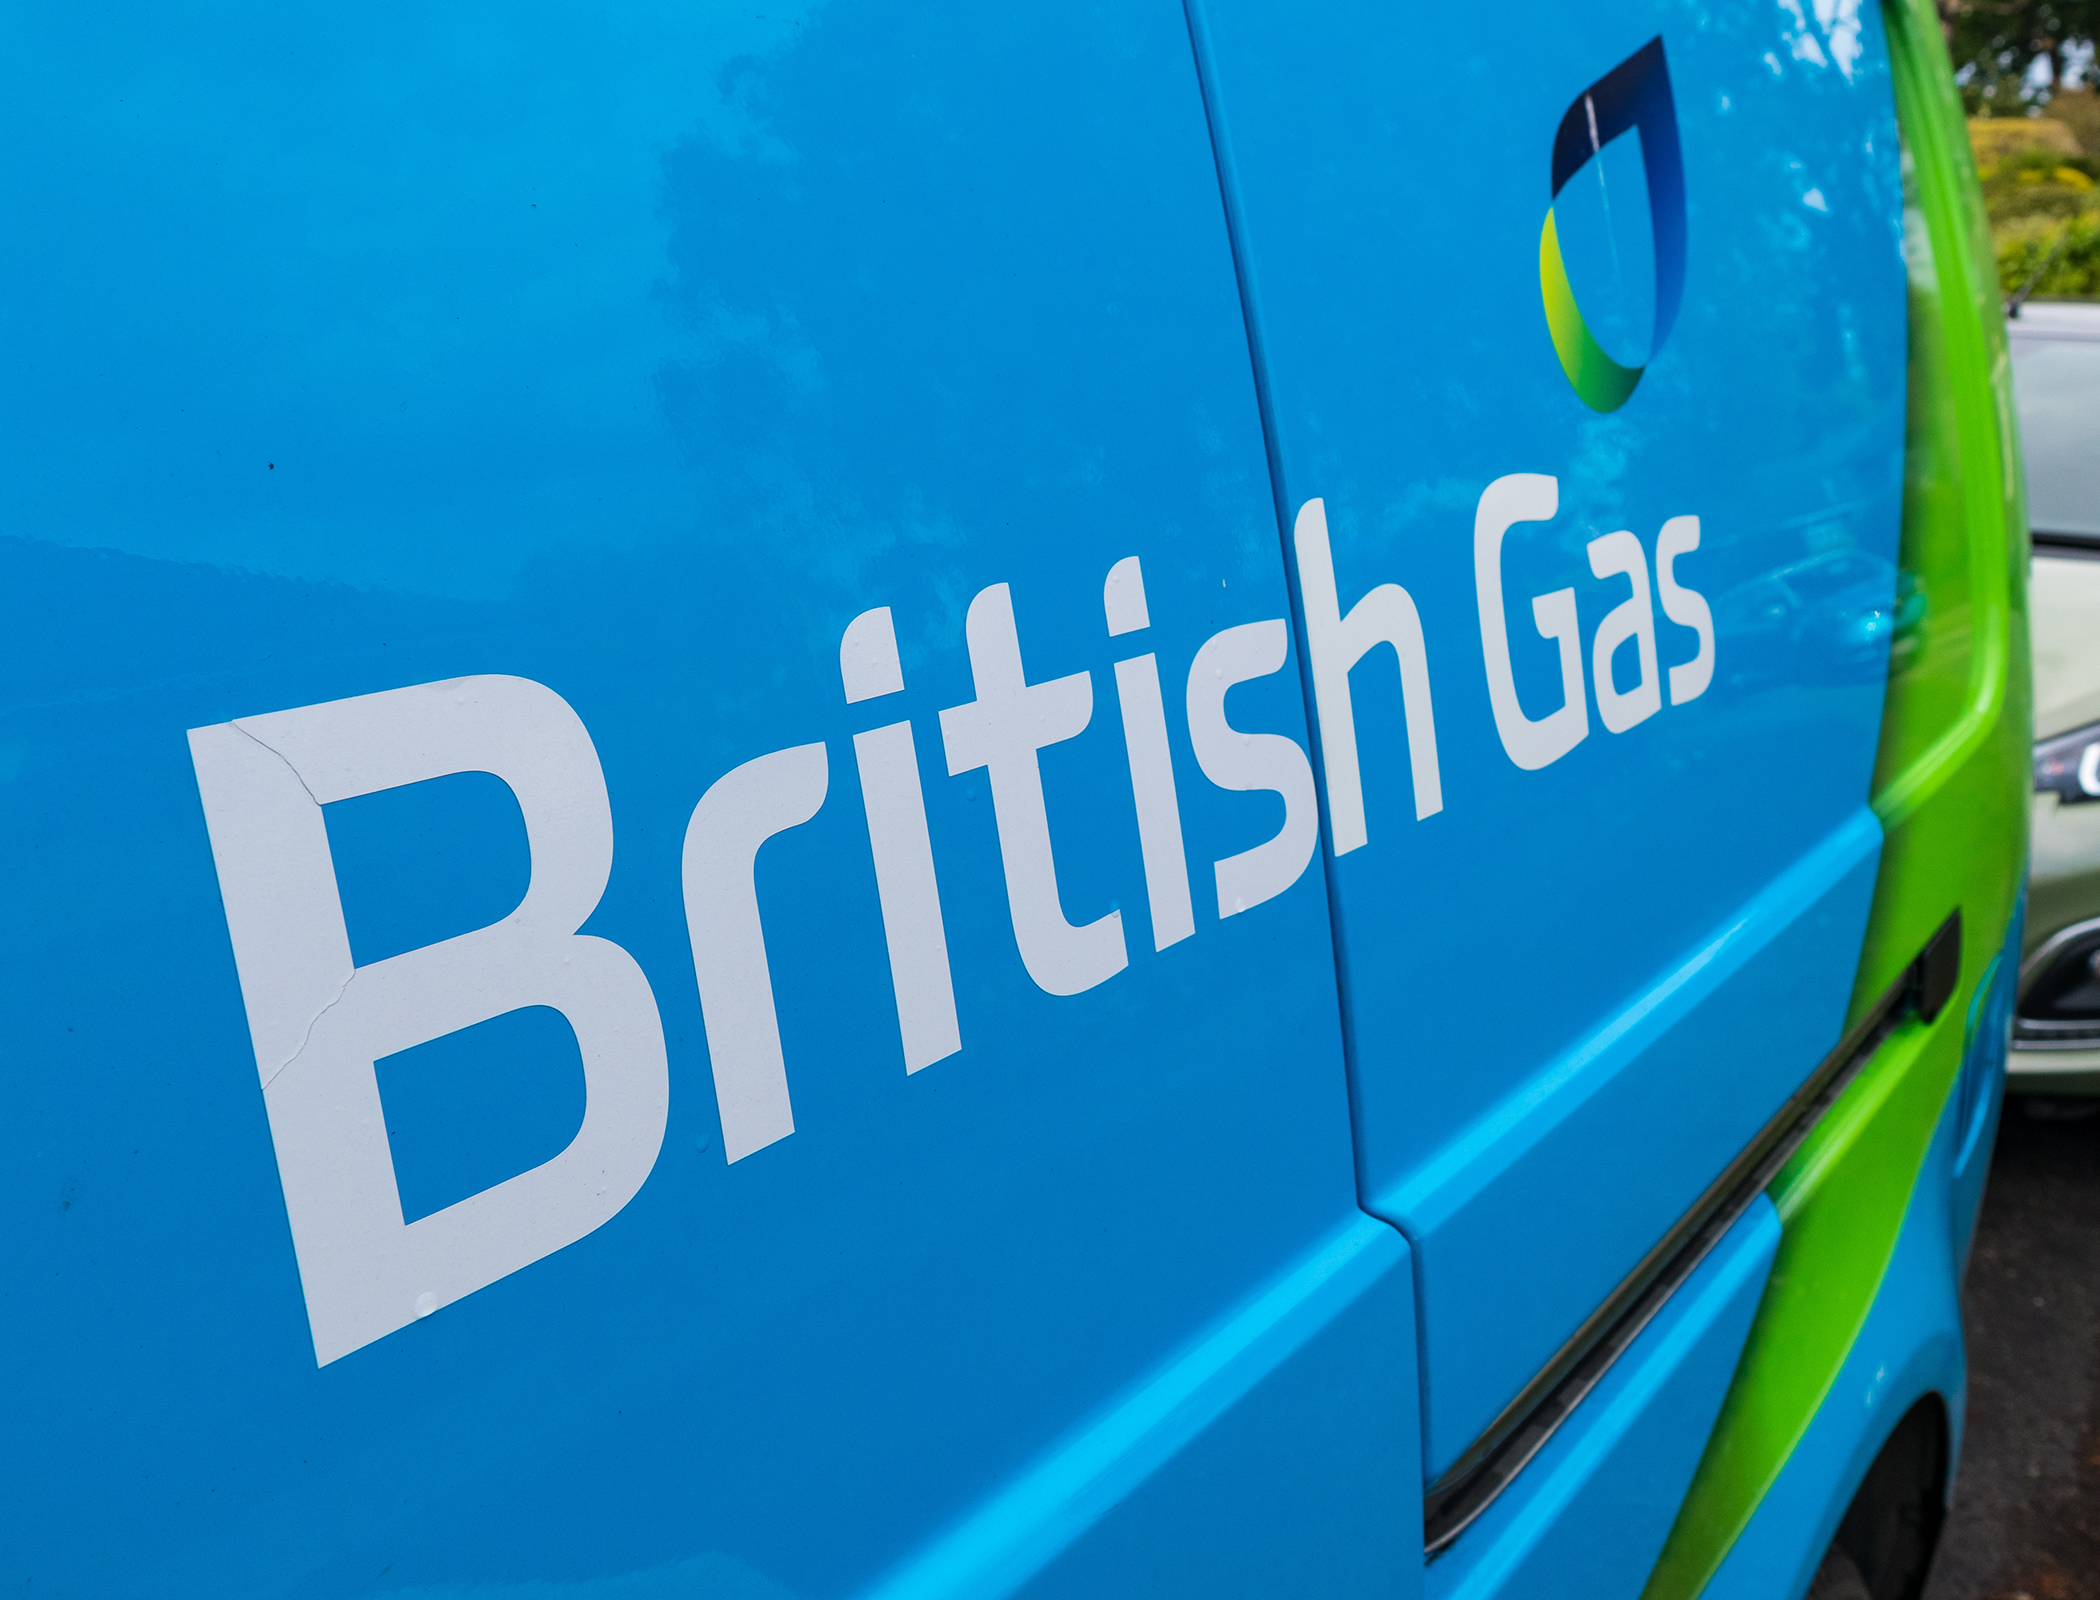 British Gas predicted to reach record profits – report